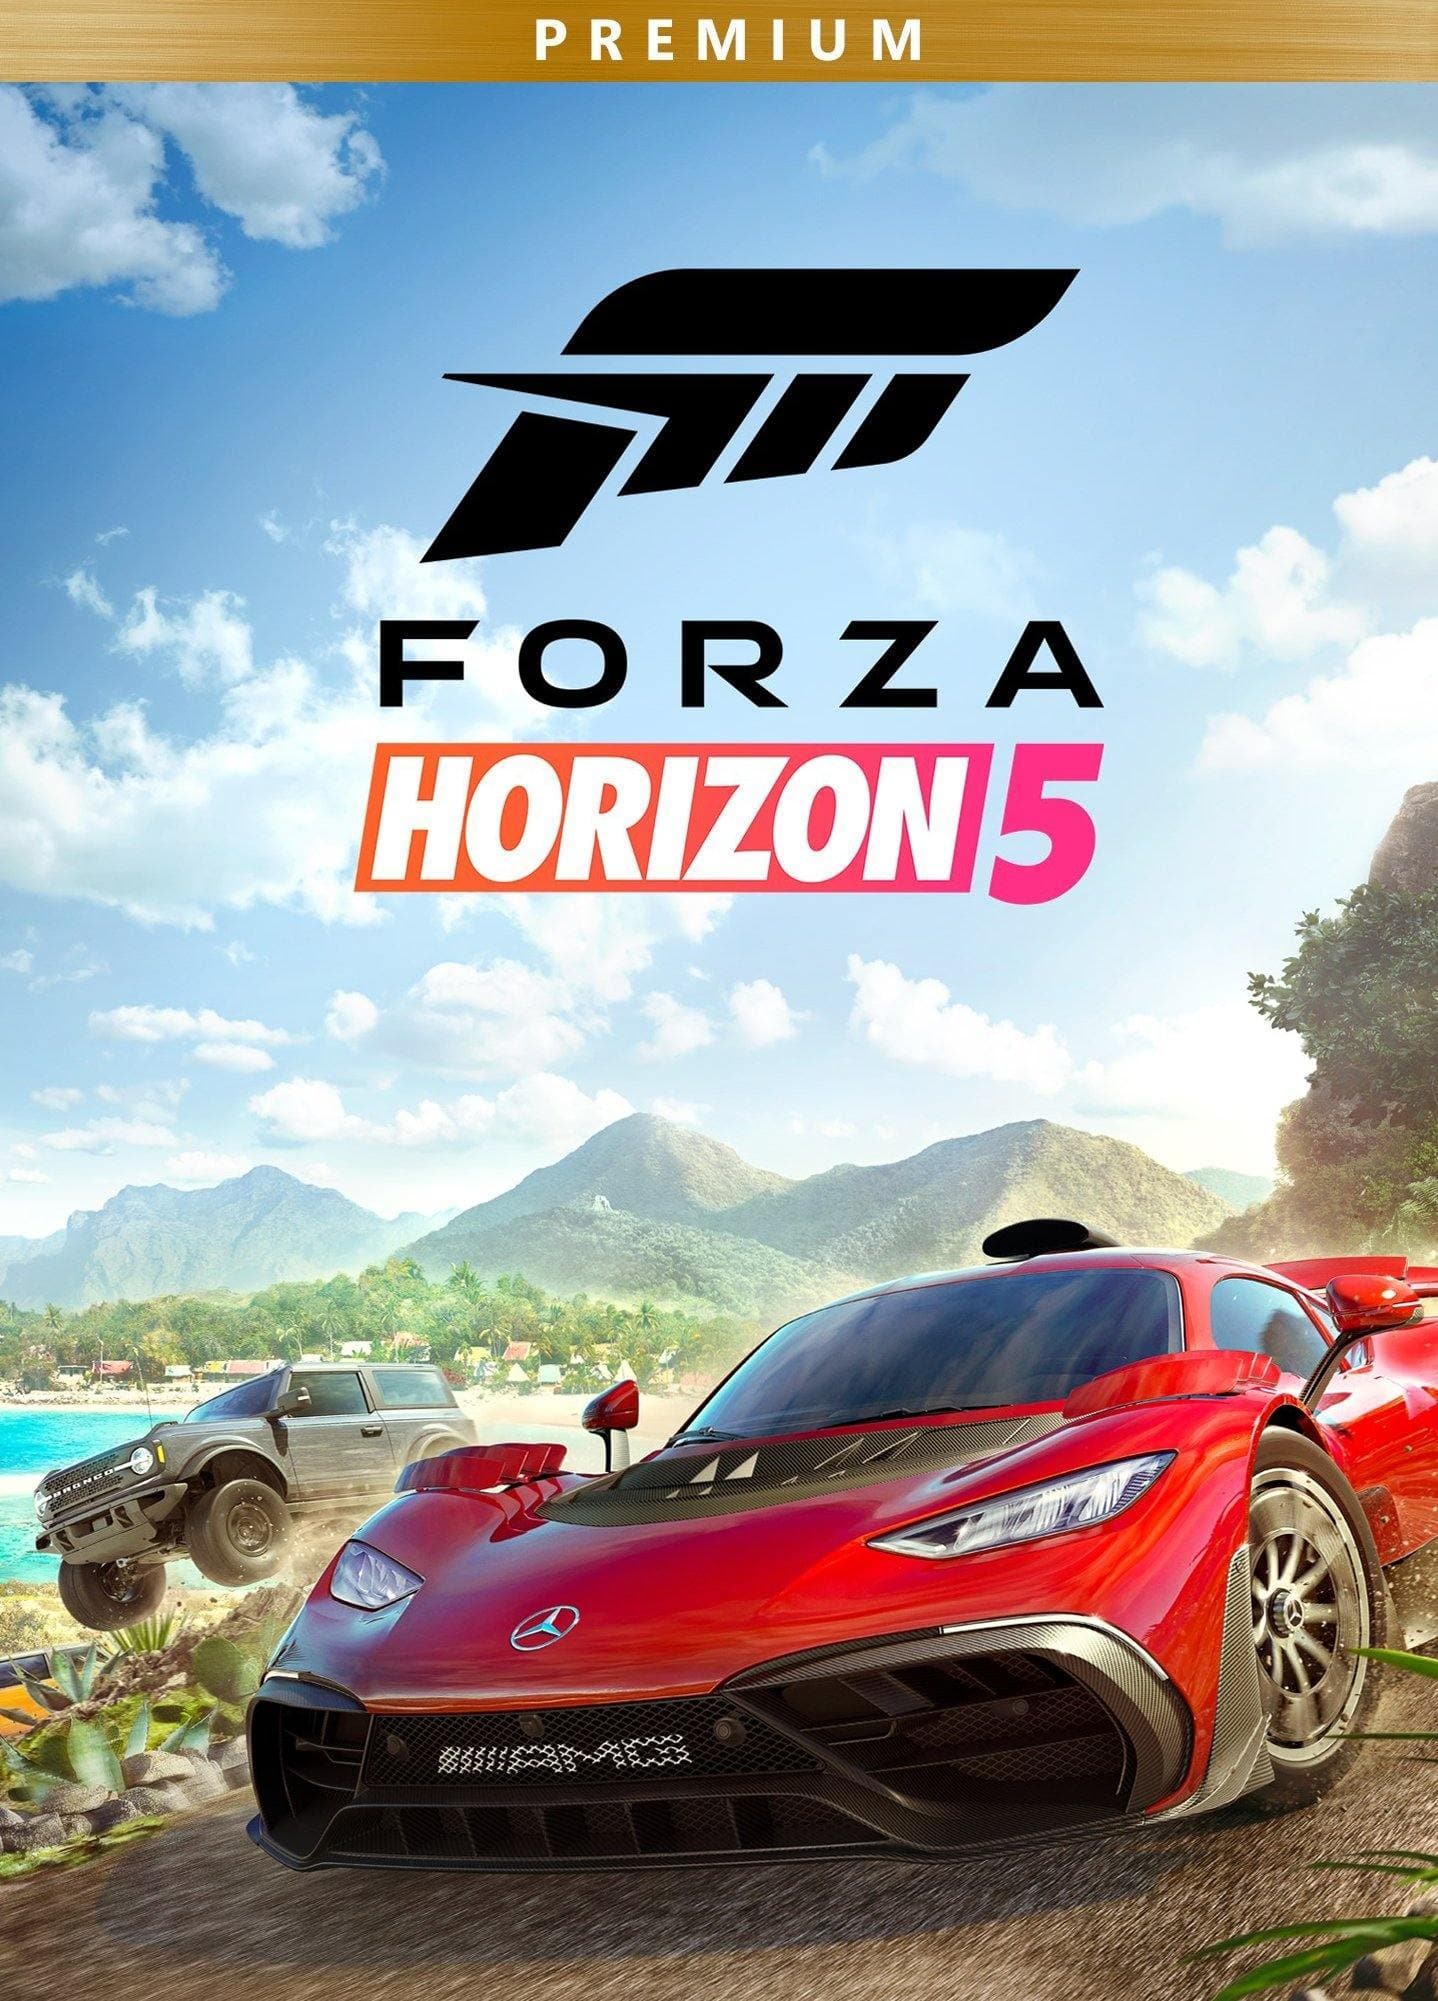 Forza Horizon 5 (Premium Edition) - למחשב ולאקסבוקס - EXON - גיימינג ותוכנות - משחקים ותוכנות למחשב ולאקס בוקס!